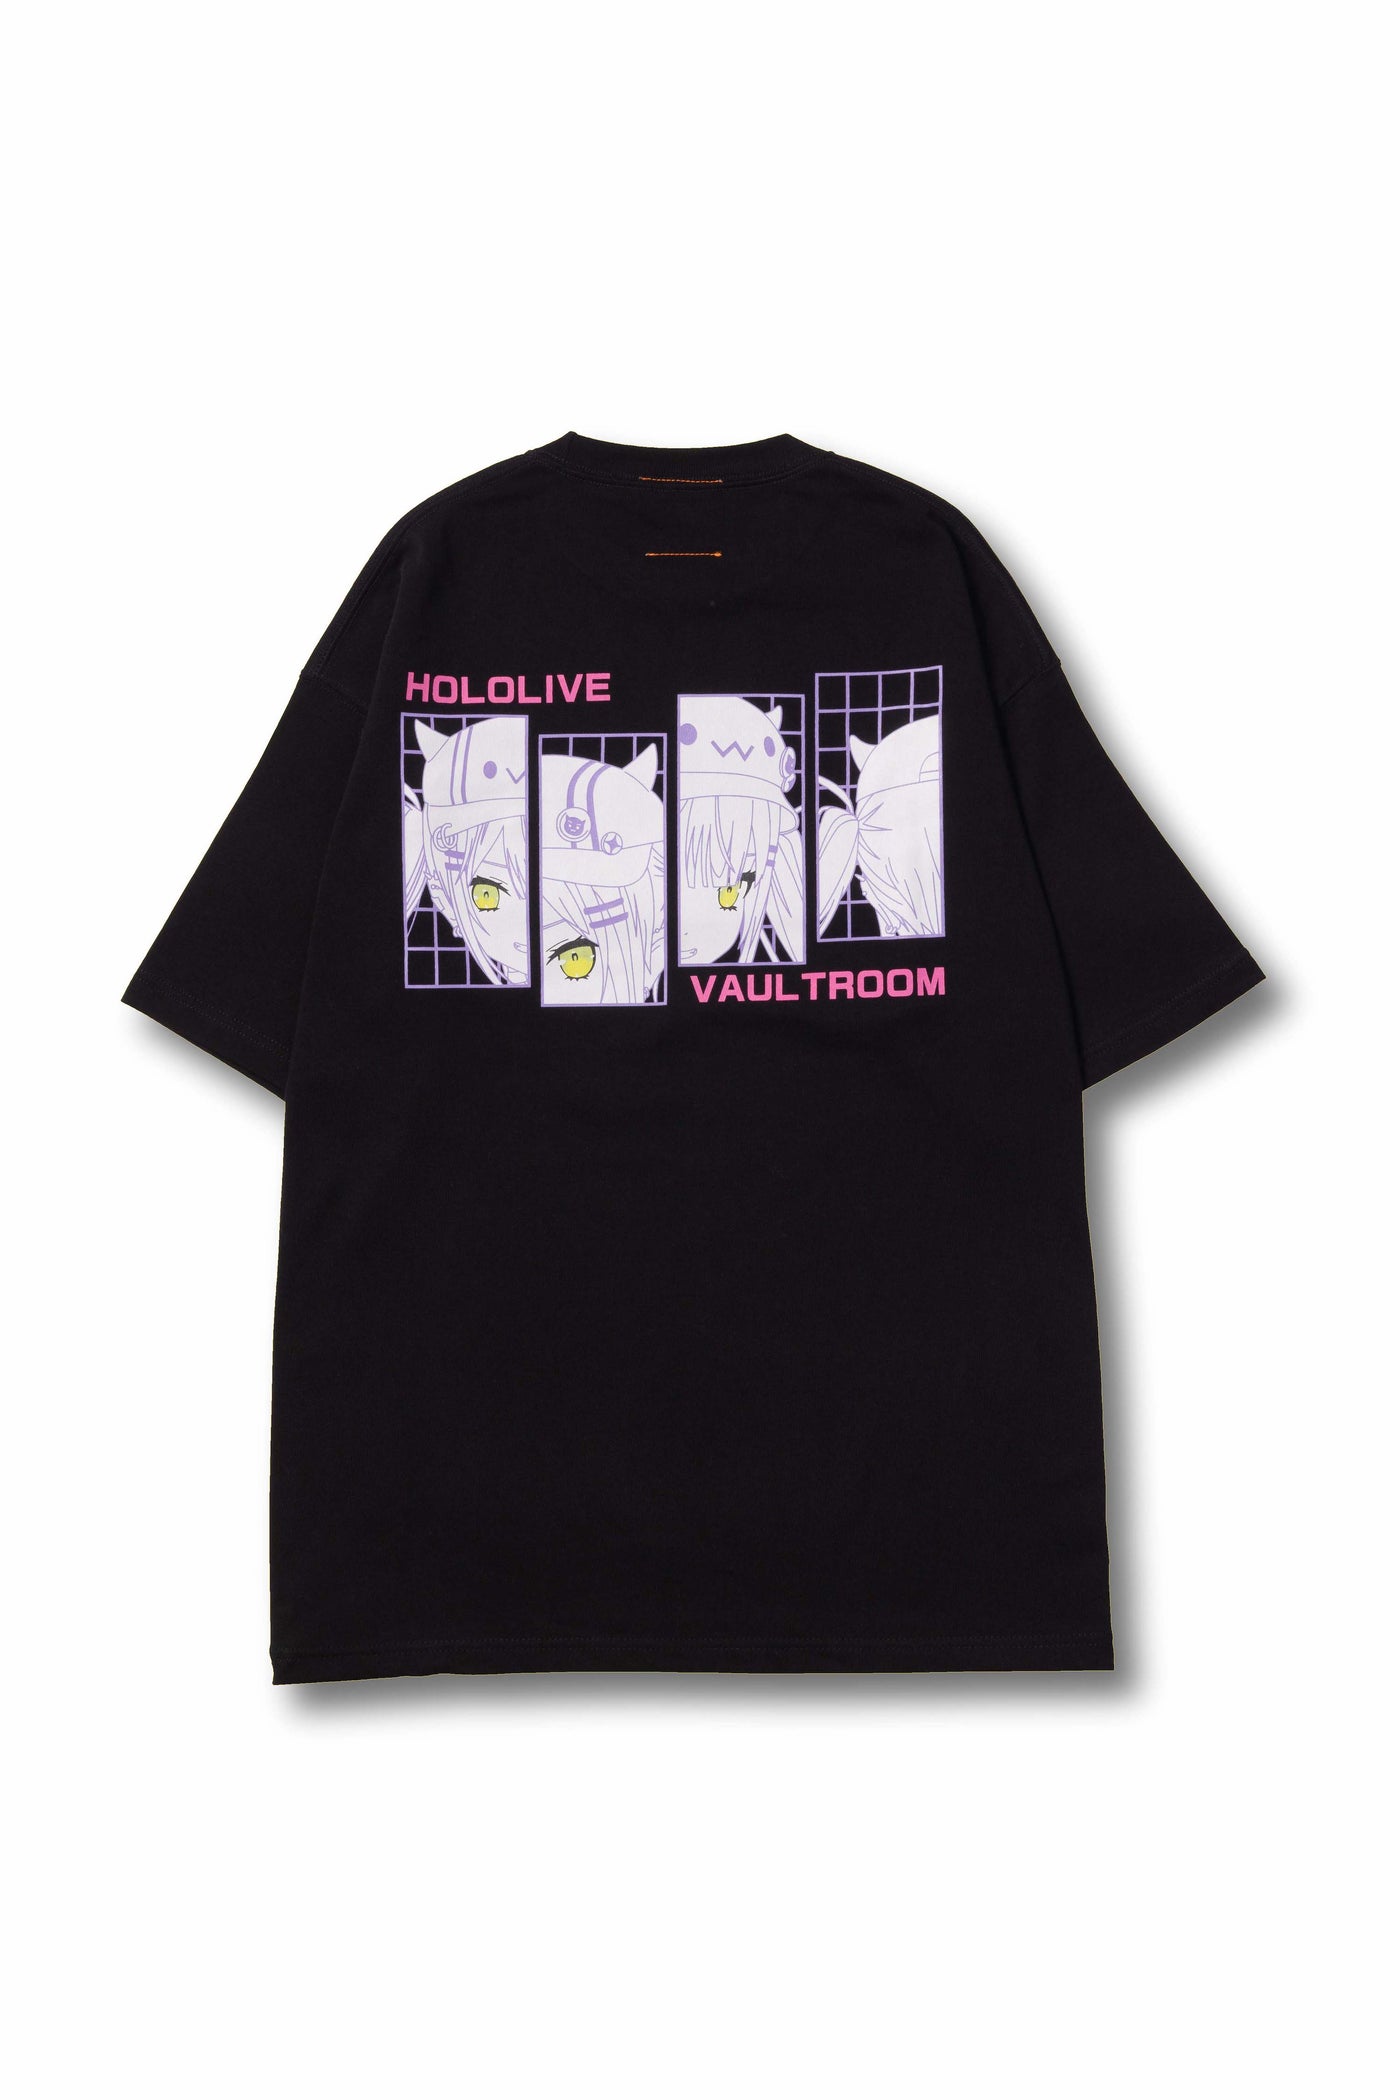 vaultroom TOKOYAMI TOWA TEE / BLK Lサイズ | hartwellspremium.com